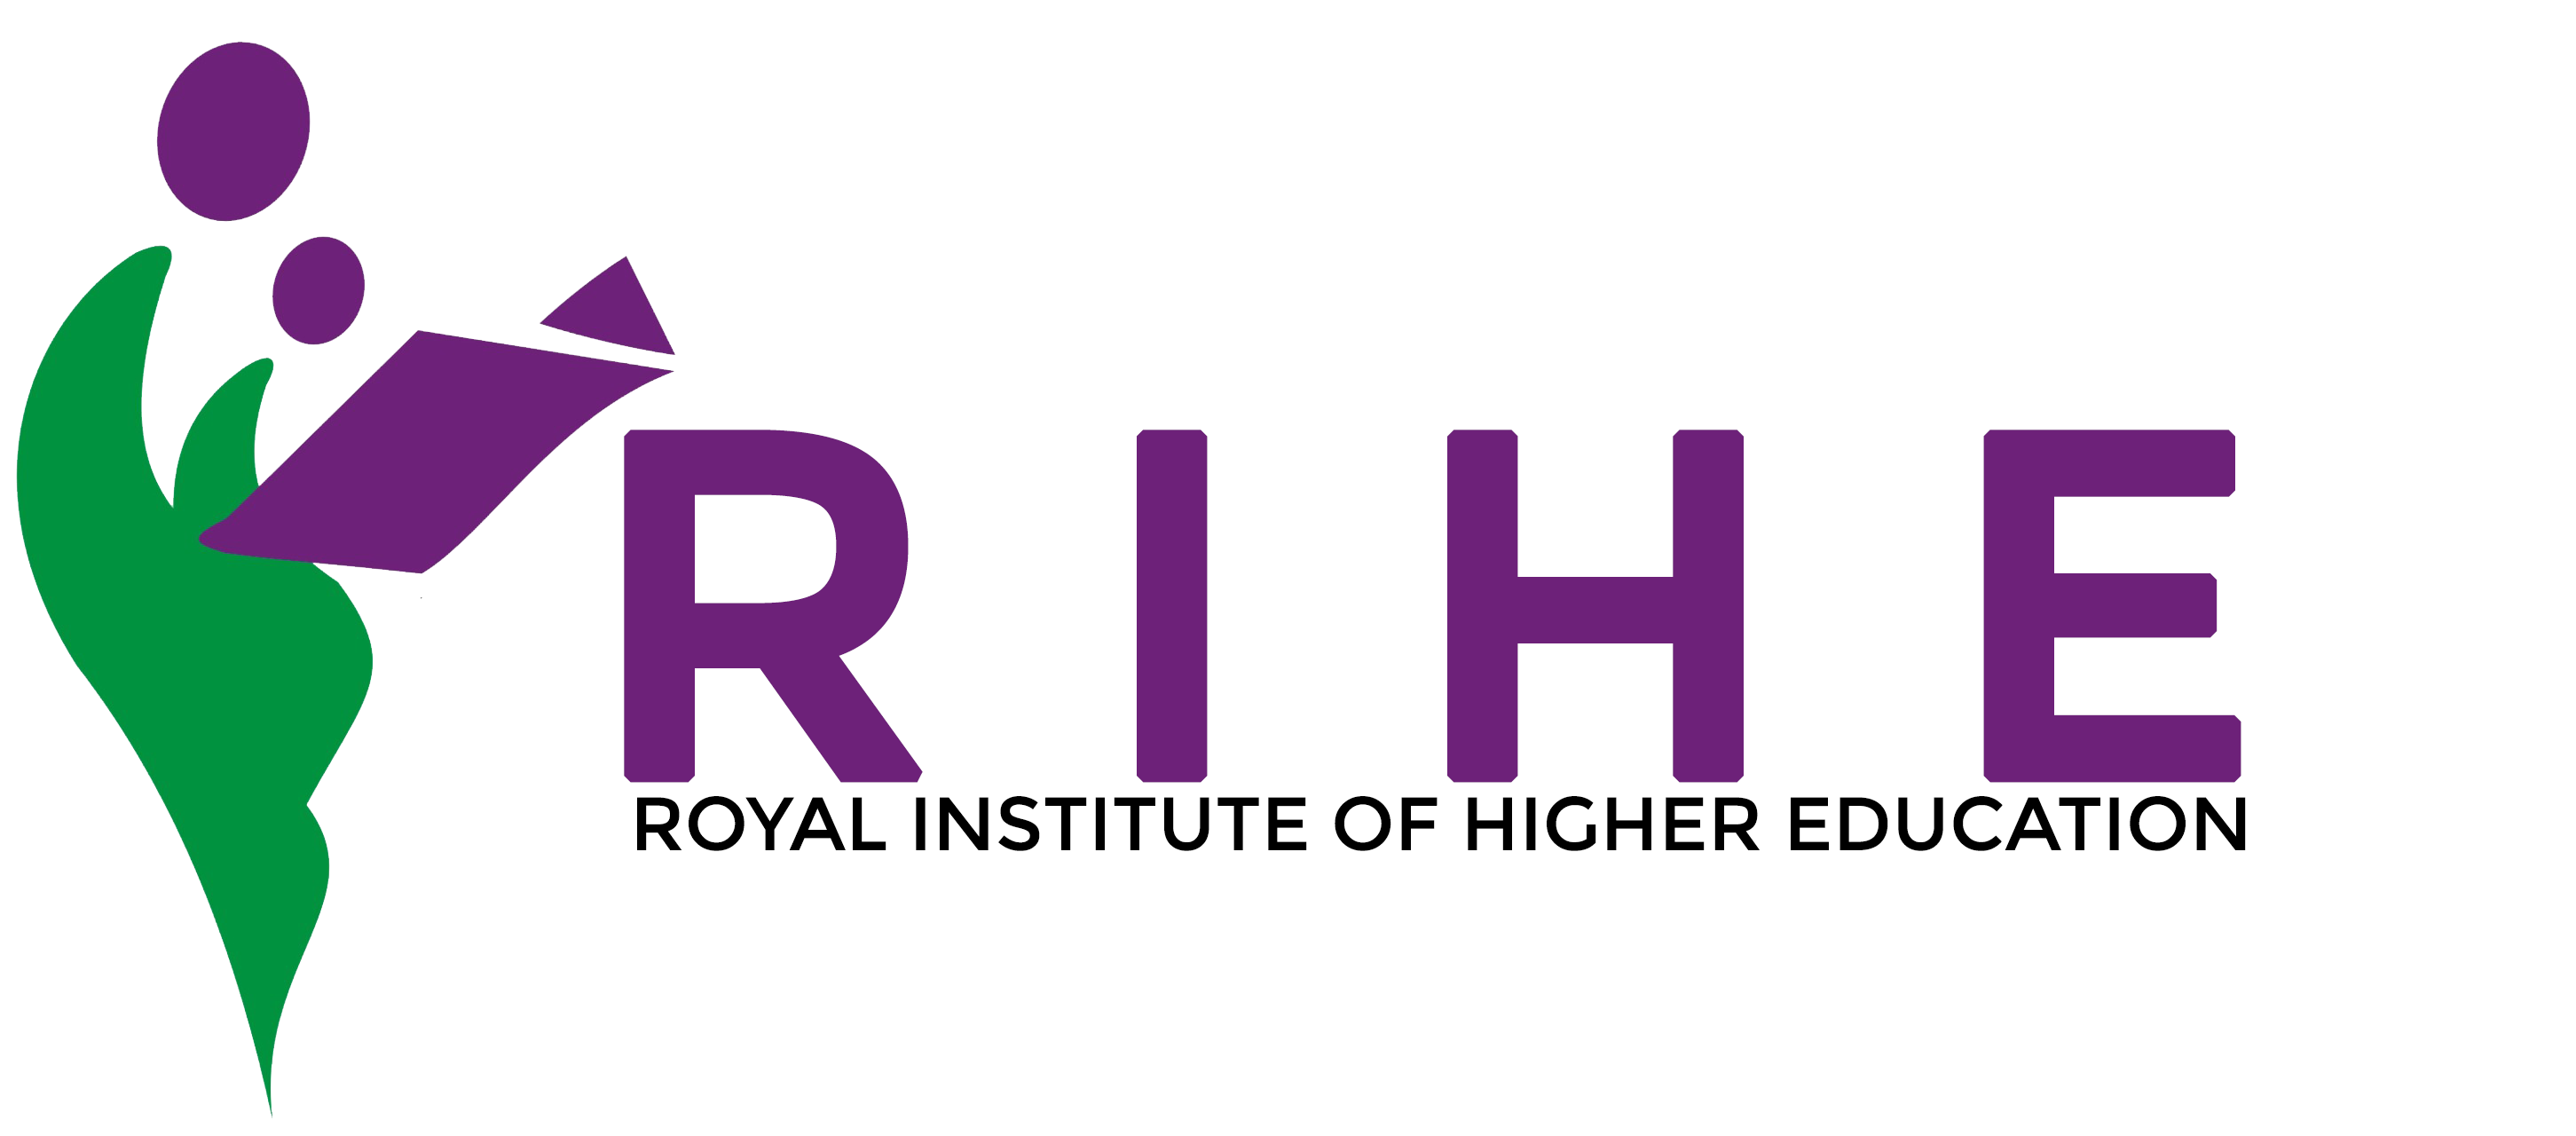 RIHE-Royal Institute of Higher Education